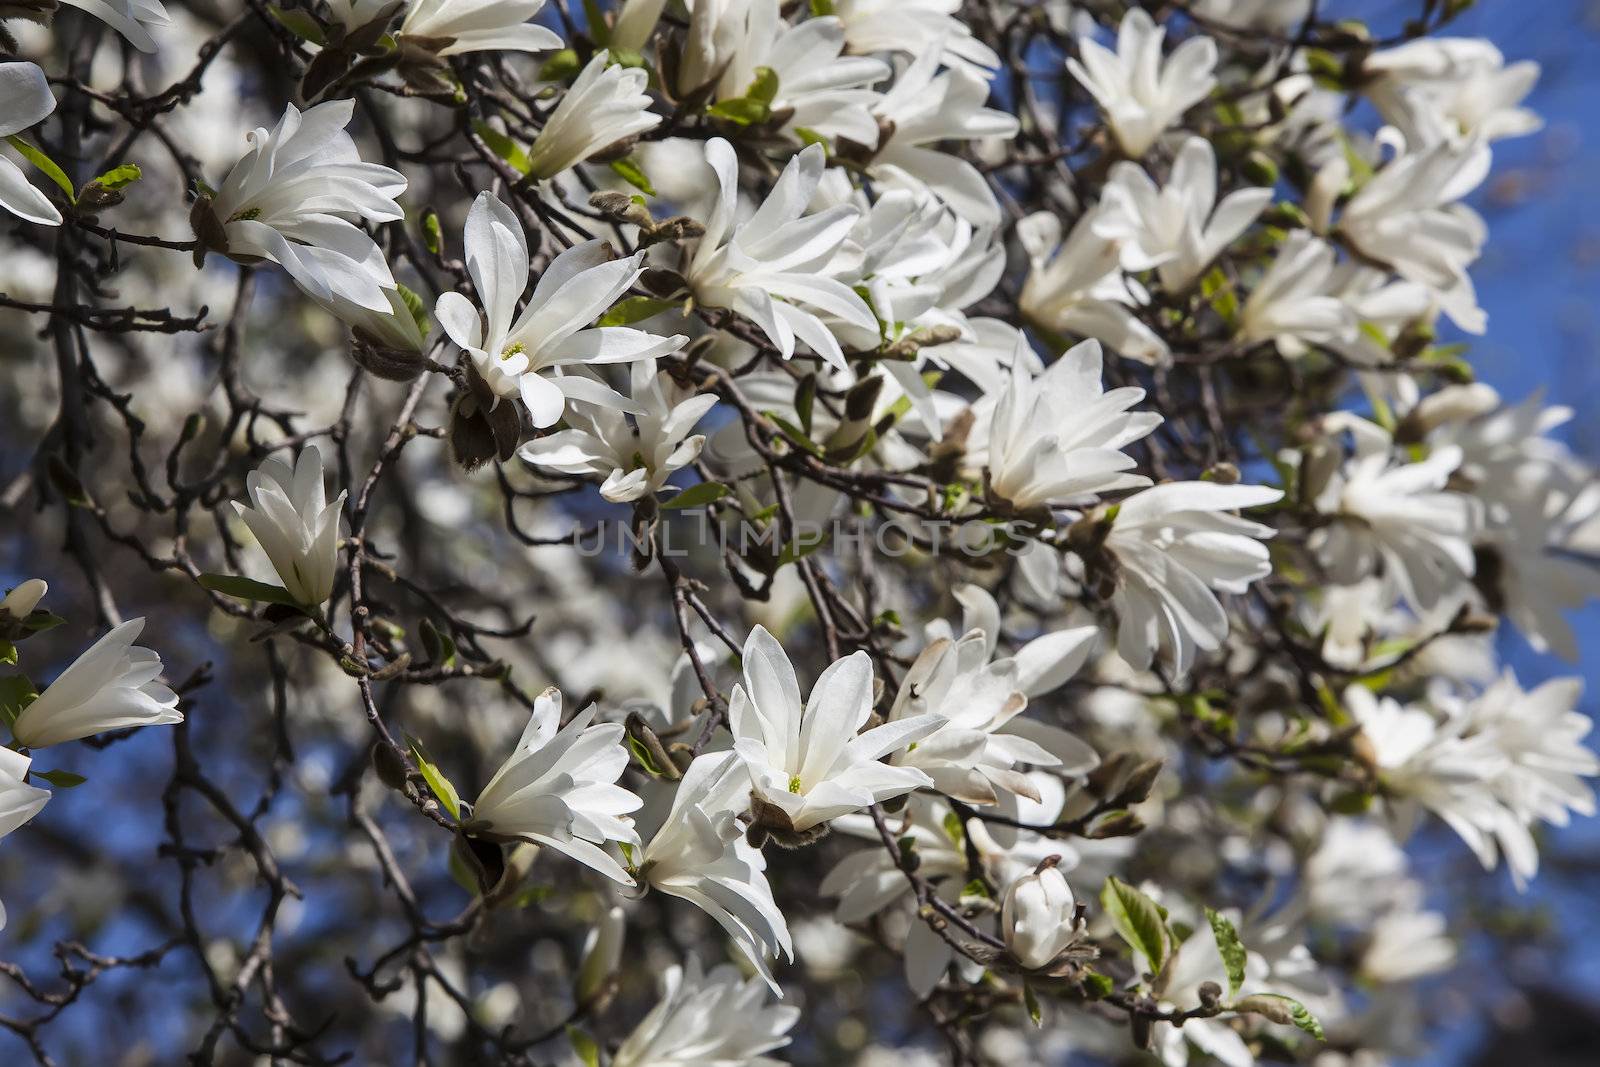 Blooming magnolia  tree by palinchak